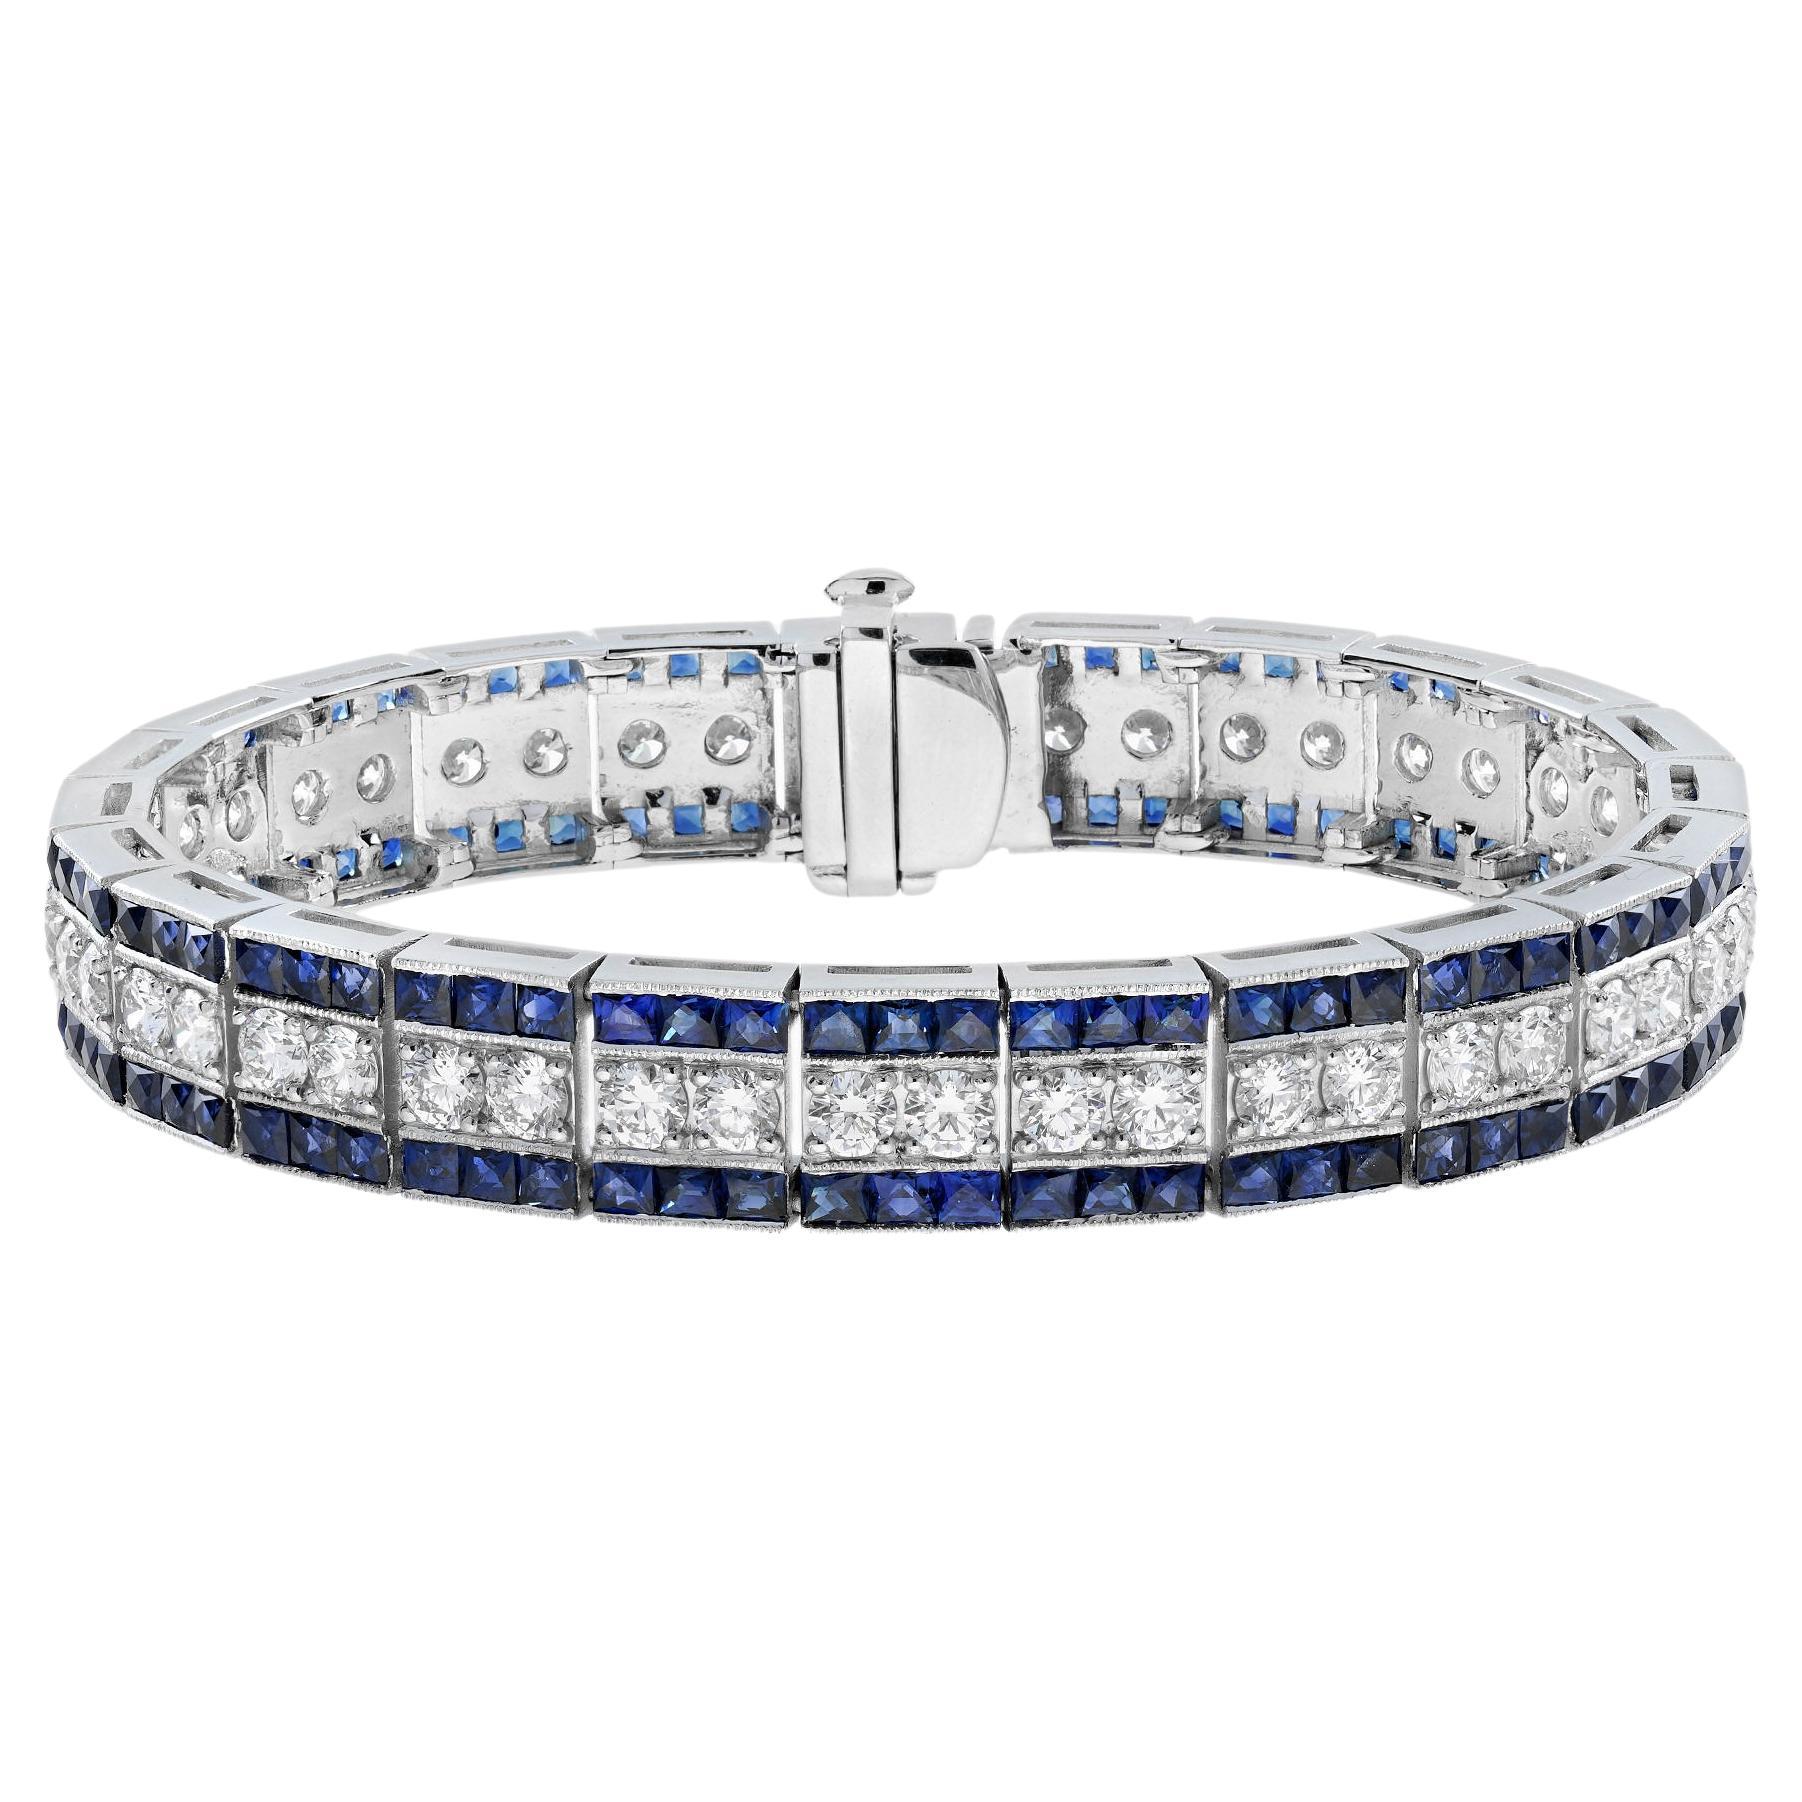 6.7 Ct. Diamond and Blue Sapphire Art Deco Style Bracelet in Platinum950